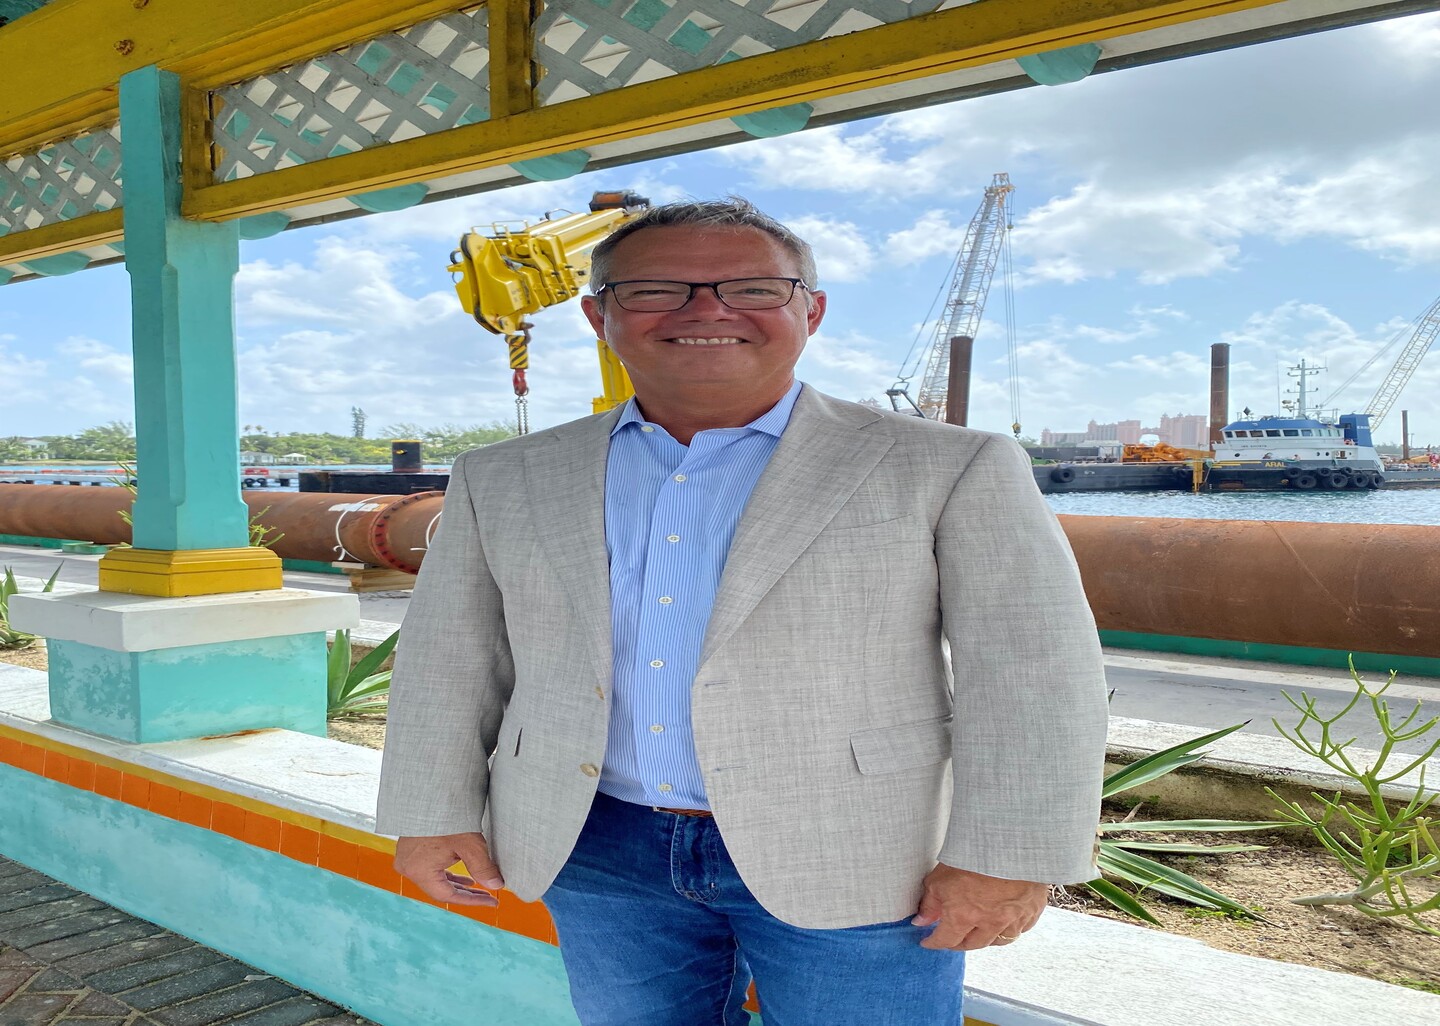 Nassau Cruise Port CEO Leads $250,000 Fundraising Effort for Caribbean Maritime Scholarships 